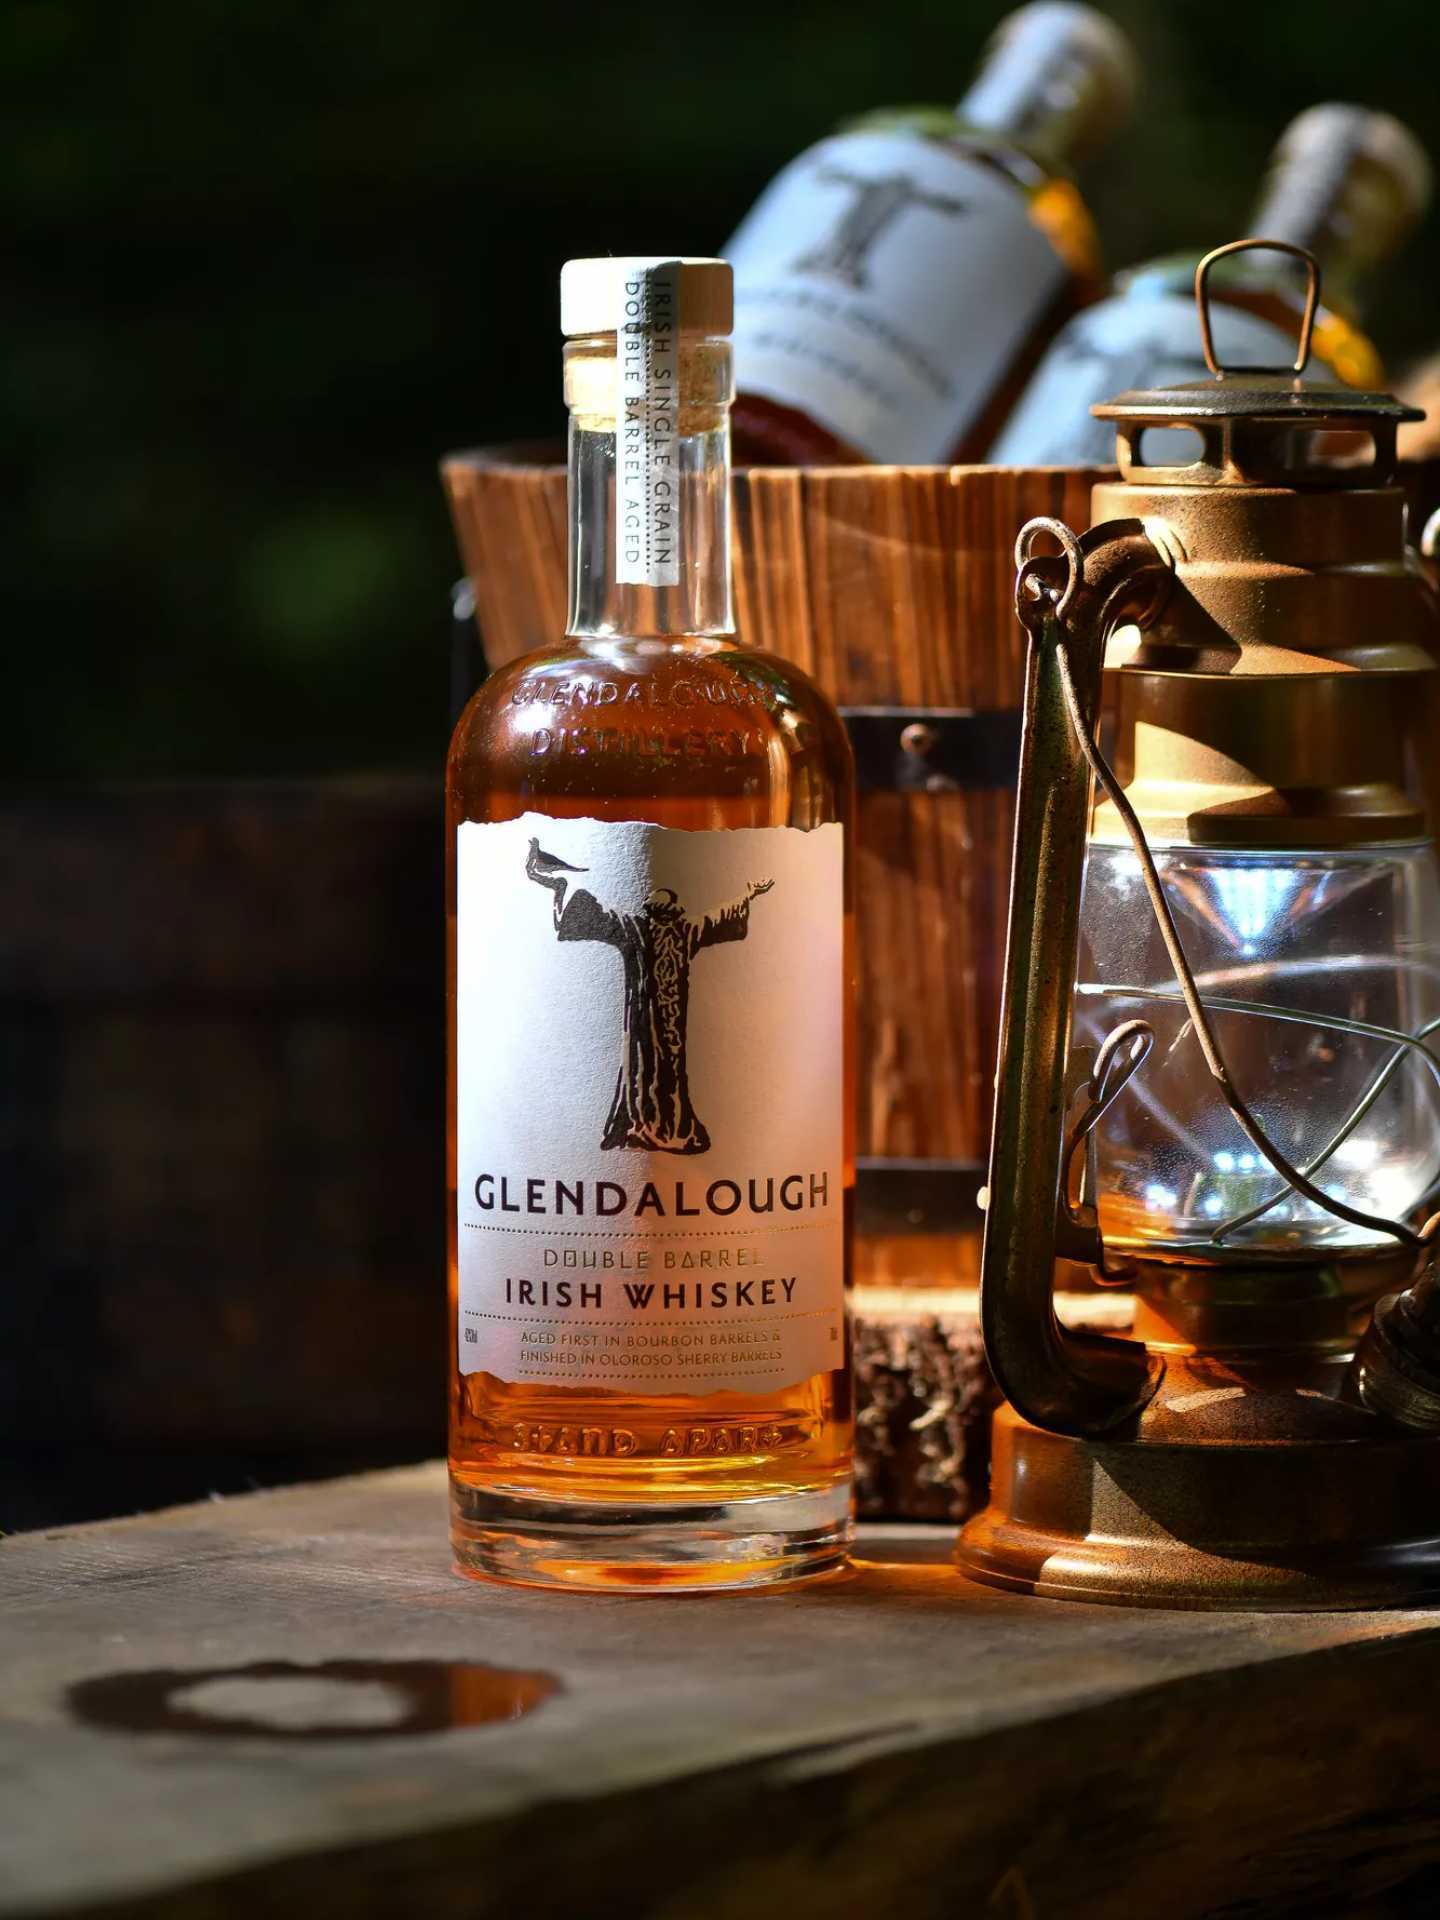 A bottle of Glendalough Double Barrel Irish Whiskey with a lantern